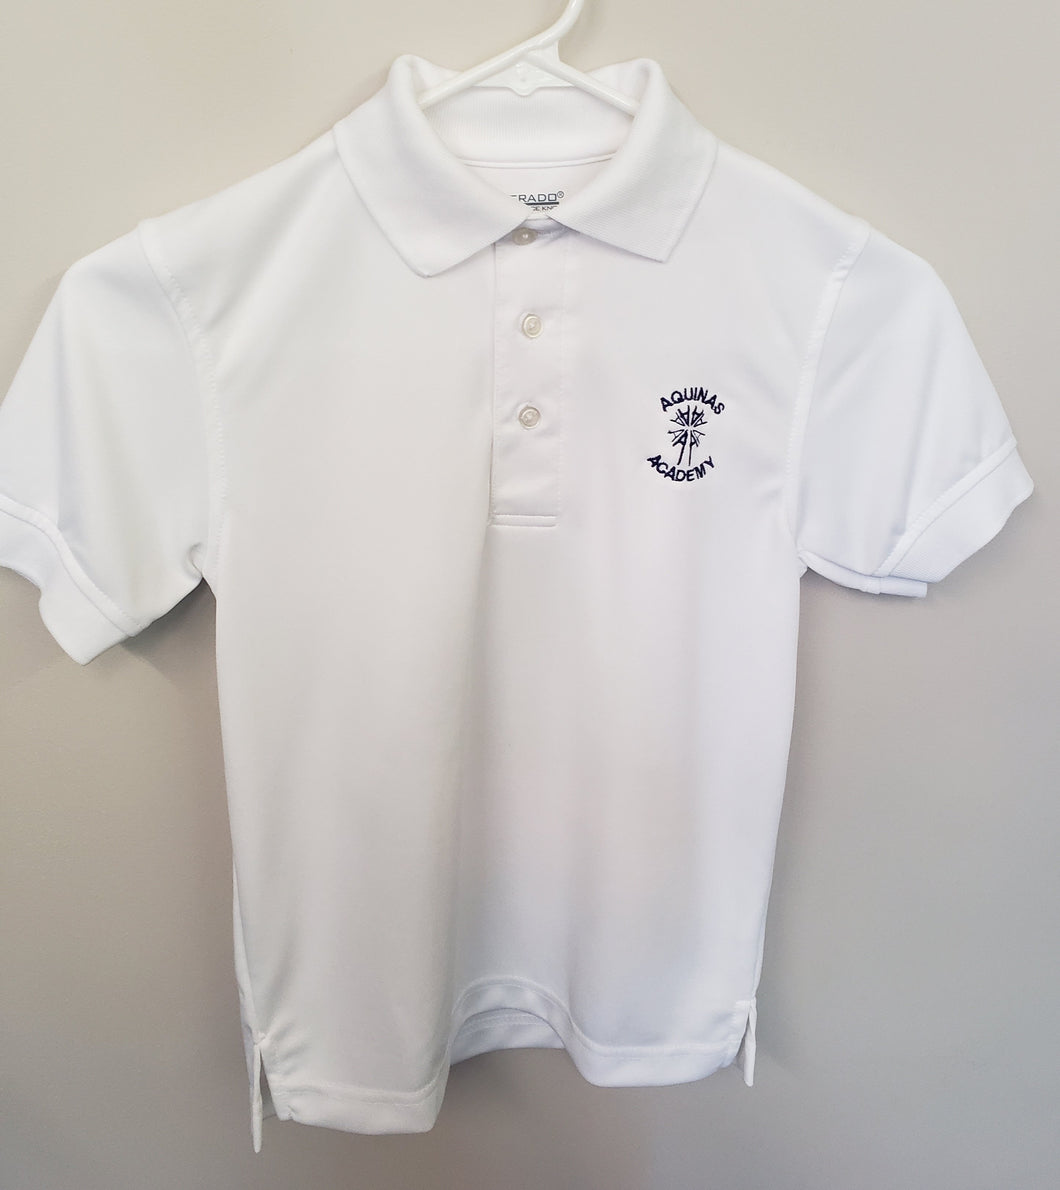 AA007 Aquinas Academy - Short Sleeve Unisex Polyester Wicking Polo - White - Youth Sizes